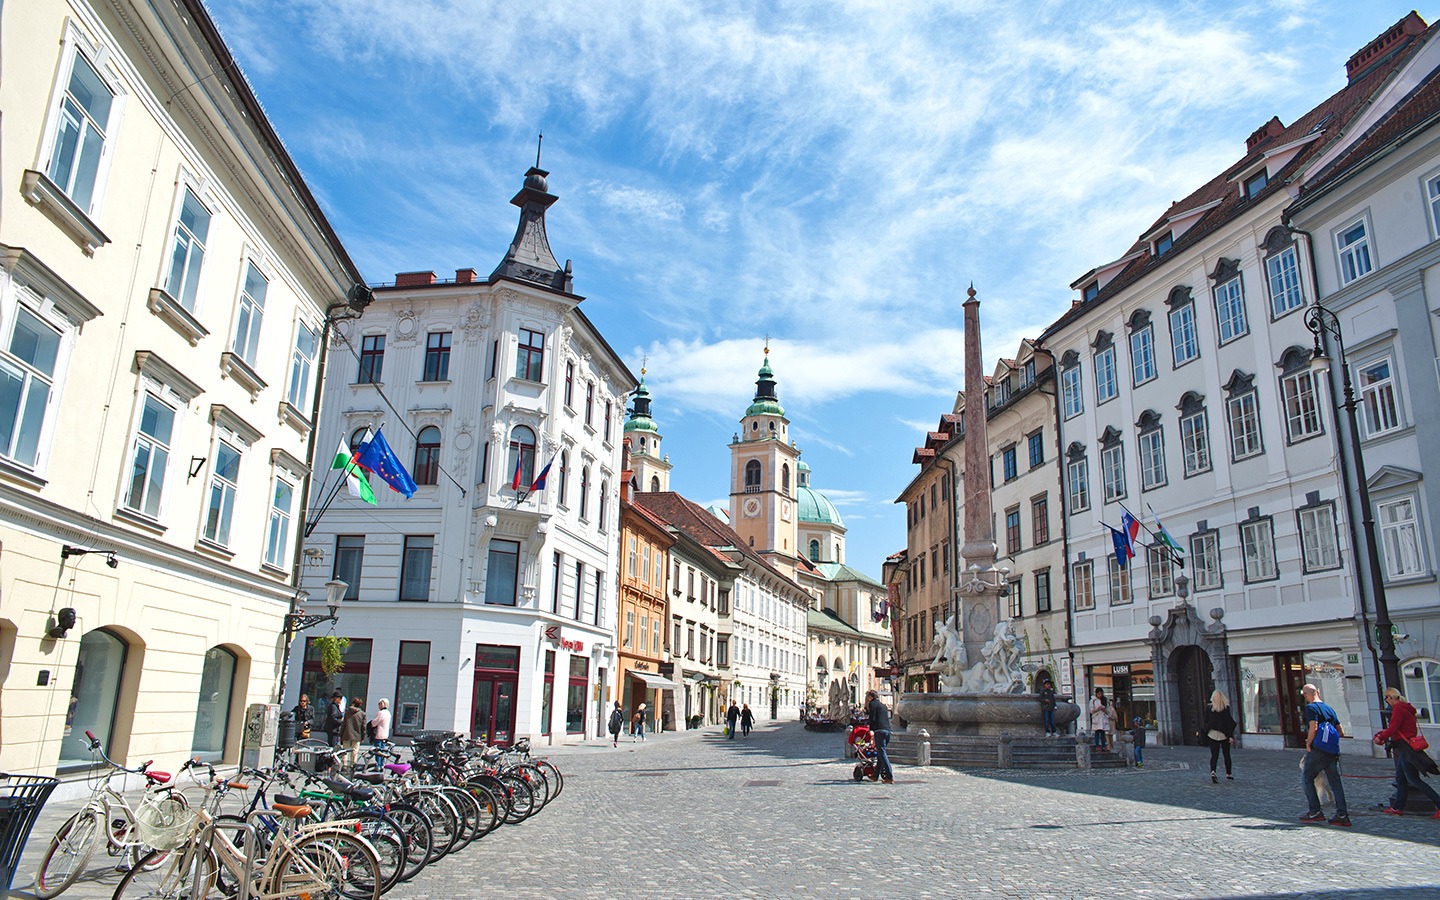 The streets of Ljubljana's old town